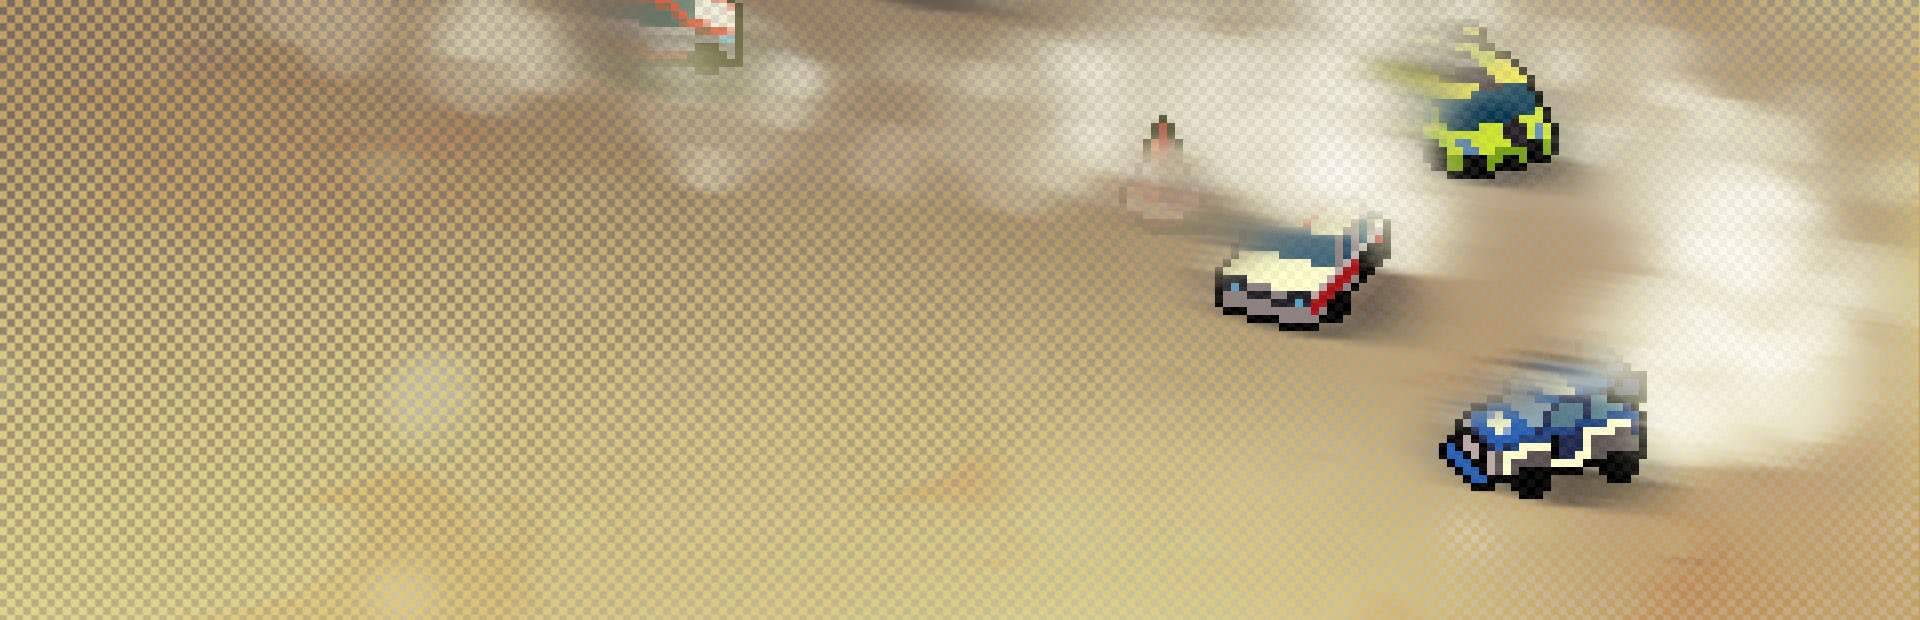 Super Pixel Racers cover image